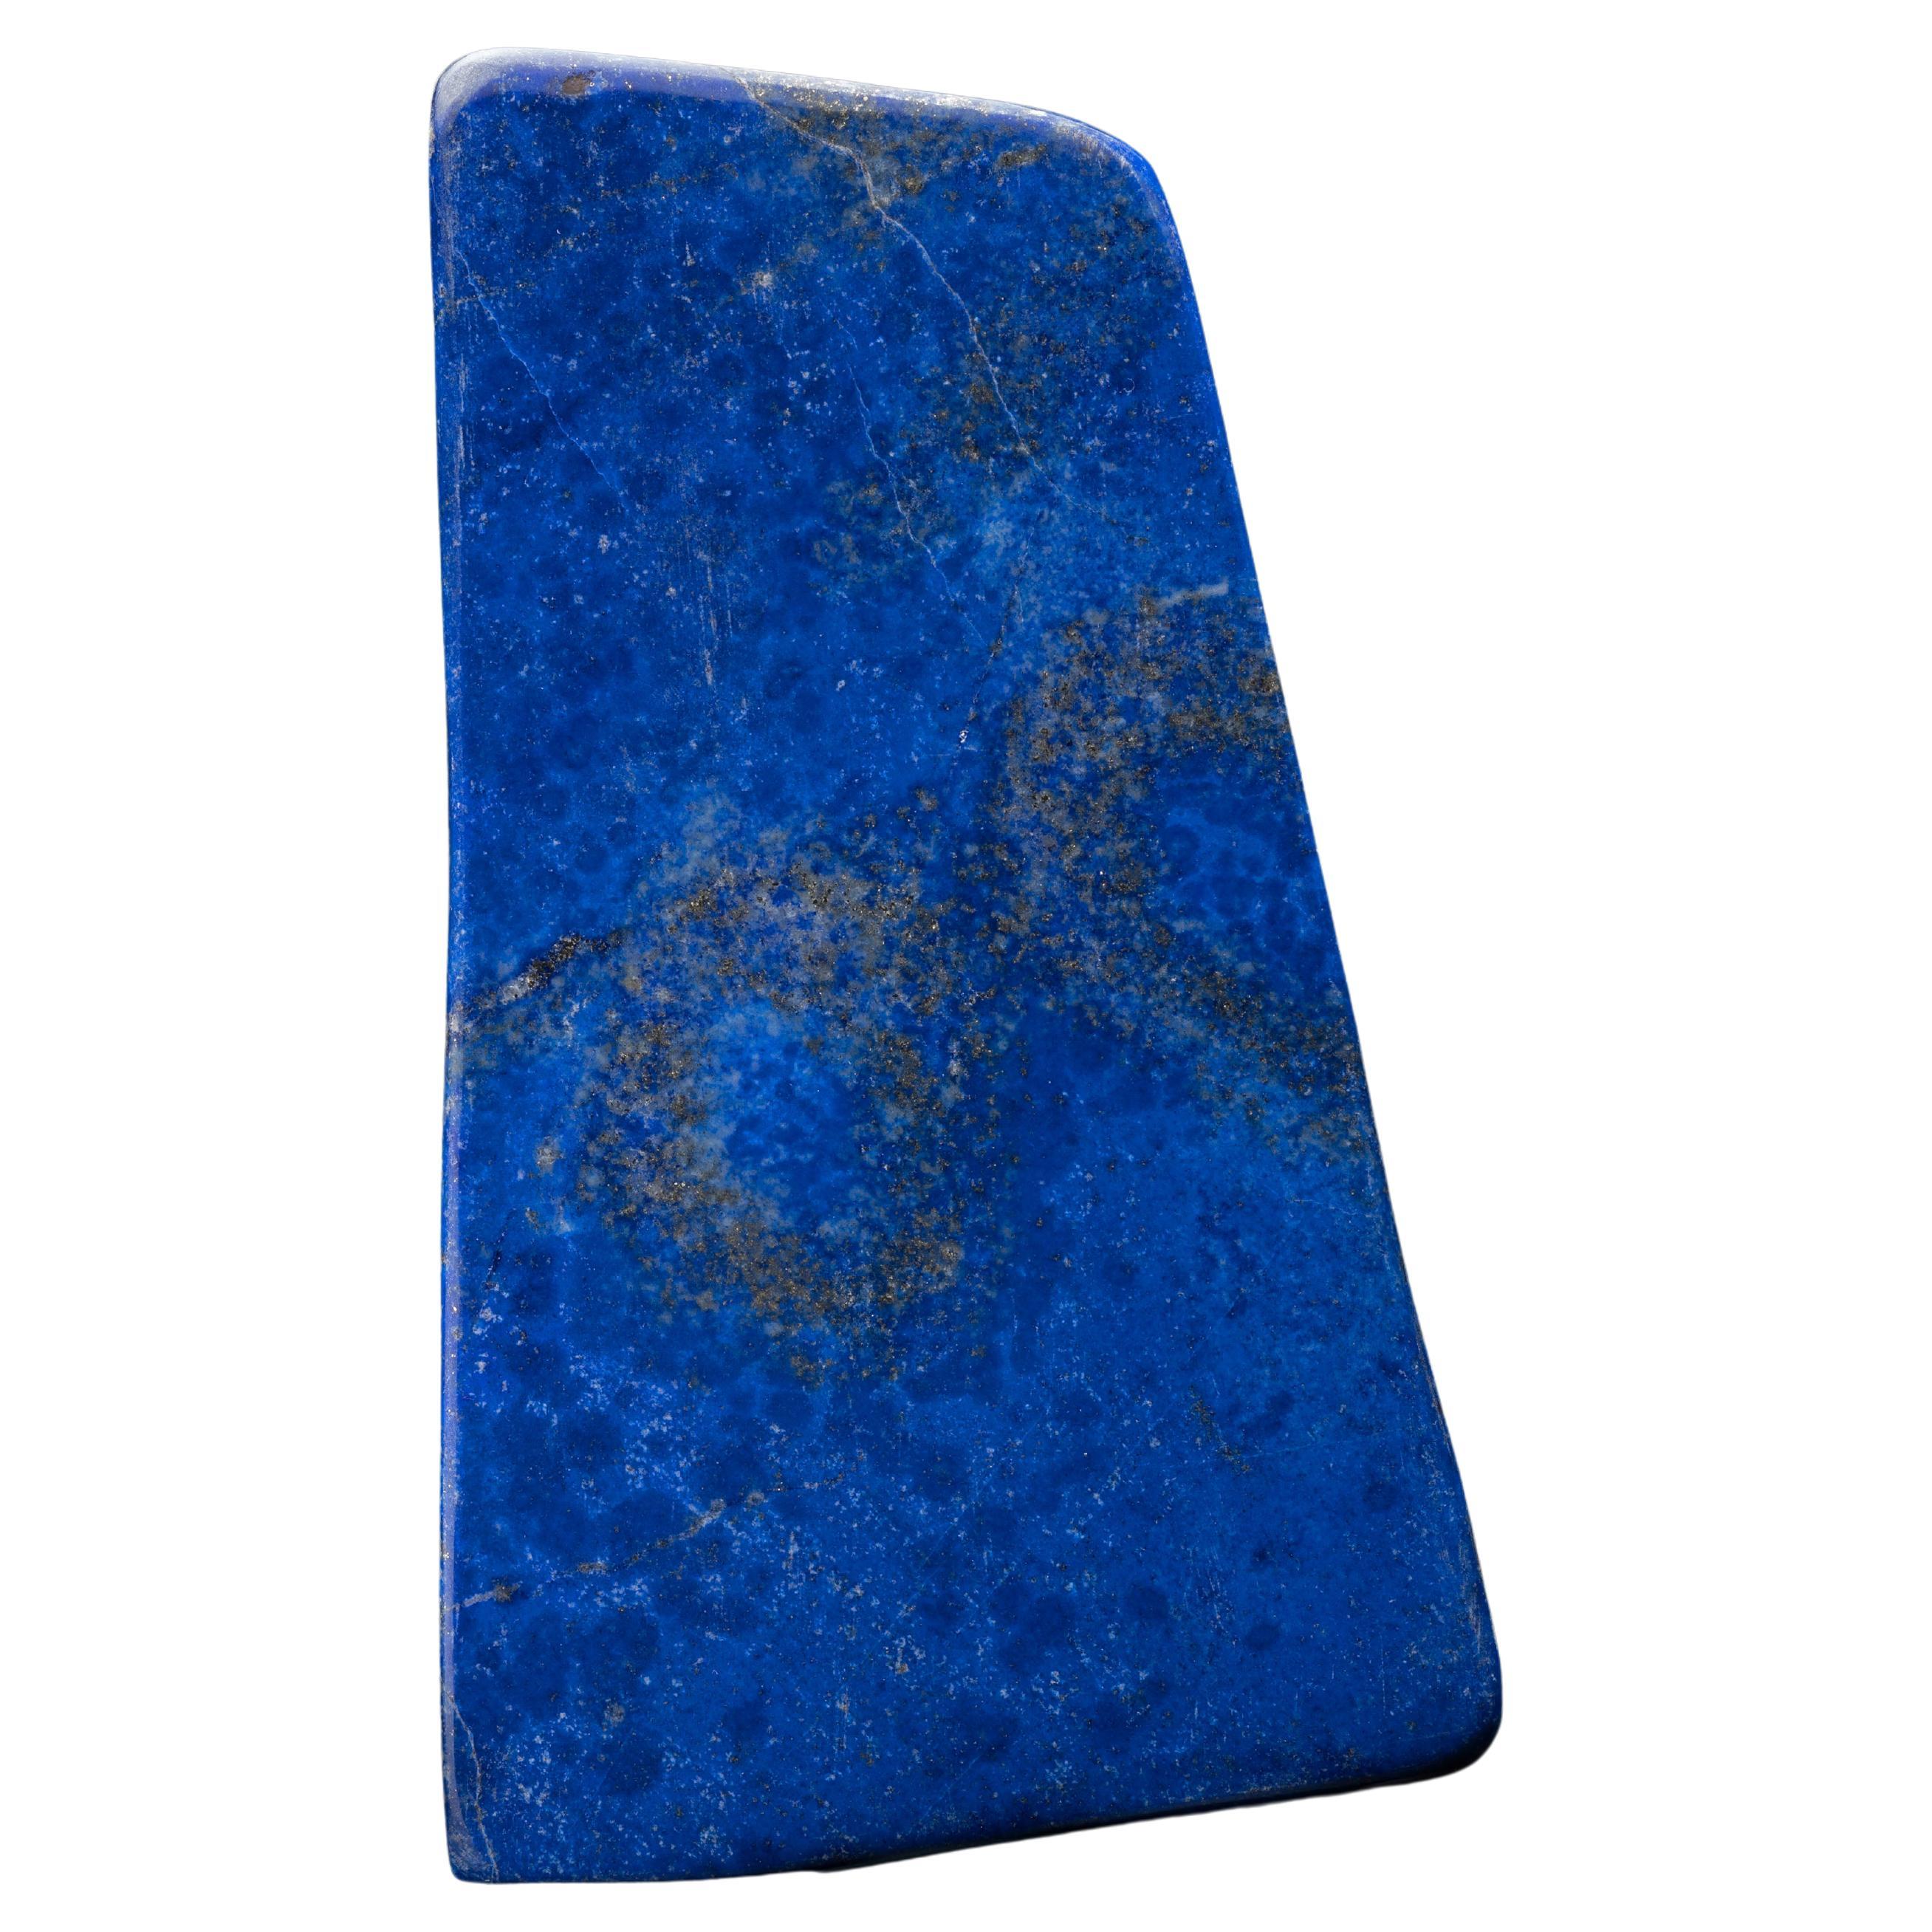 Genuine Hand-Polished Lapis Lazuli Freeform // 2.25 Lb